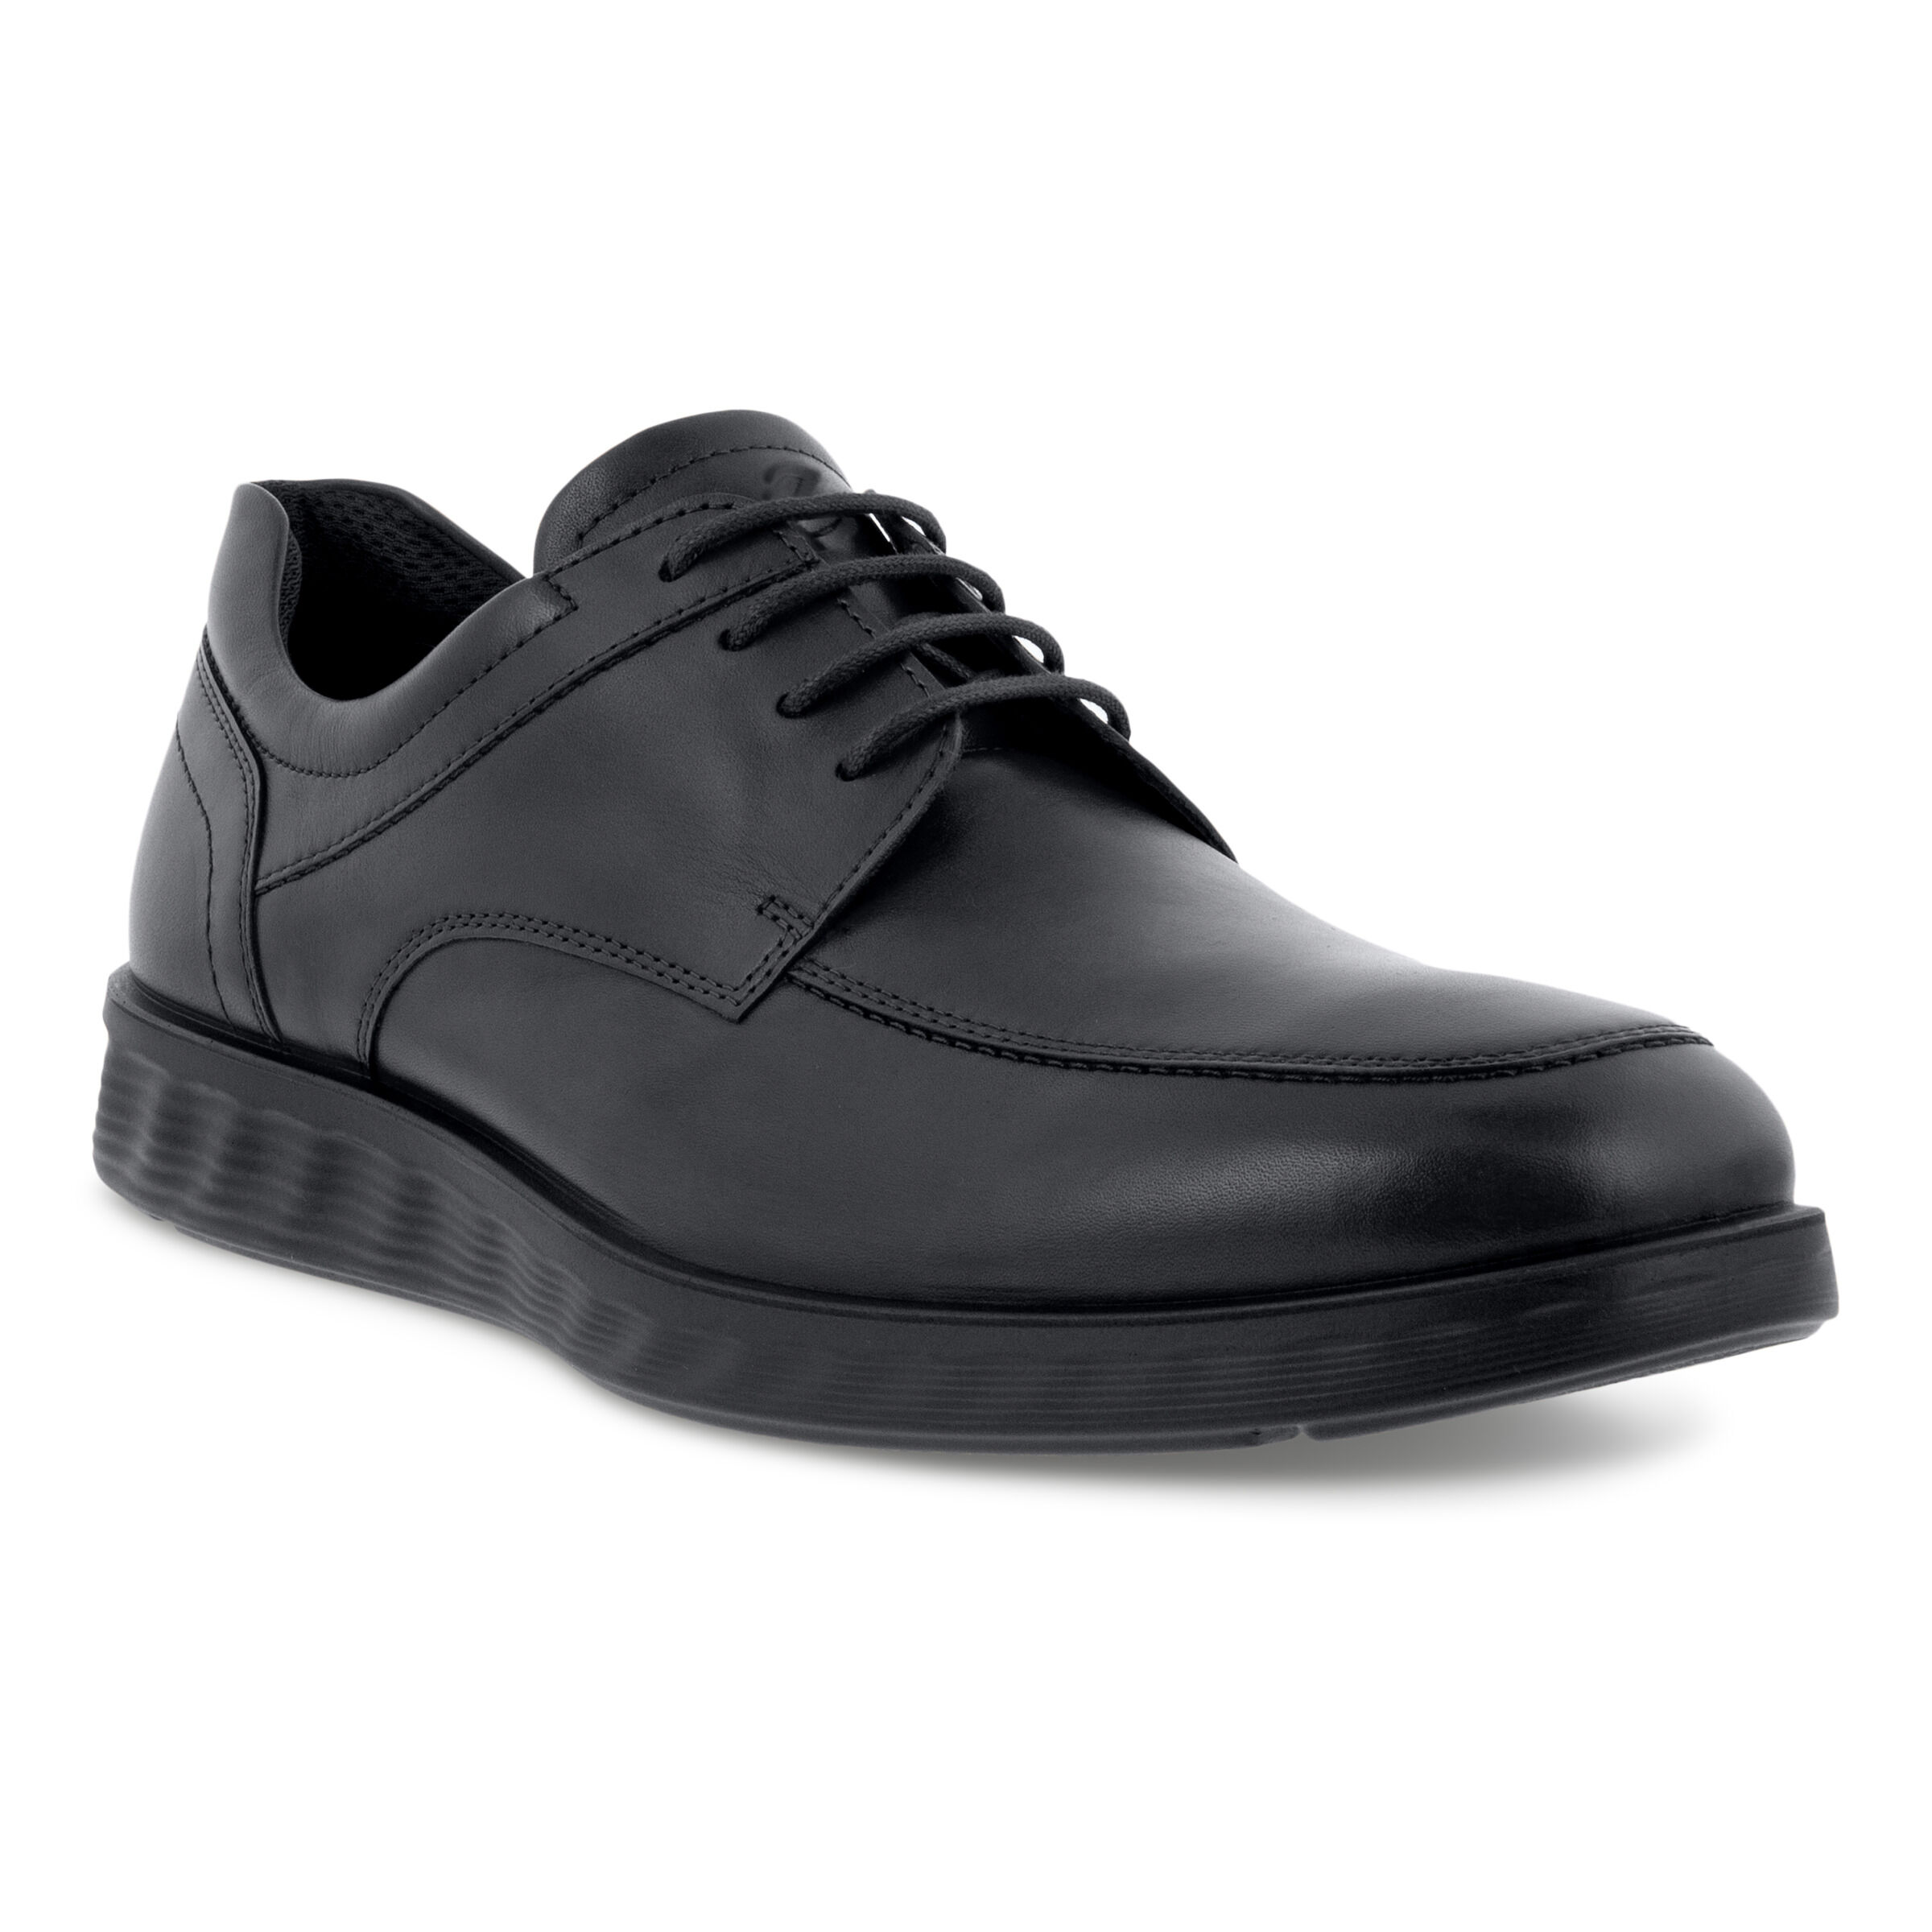 Clarks Un Geo Lace S Wide Fit Casual Shoes 7 Dark Brown for Men Mens Shoes Lace-ups Derby shoes 